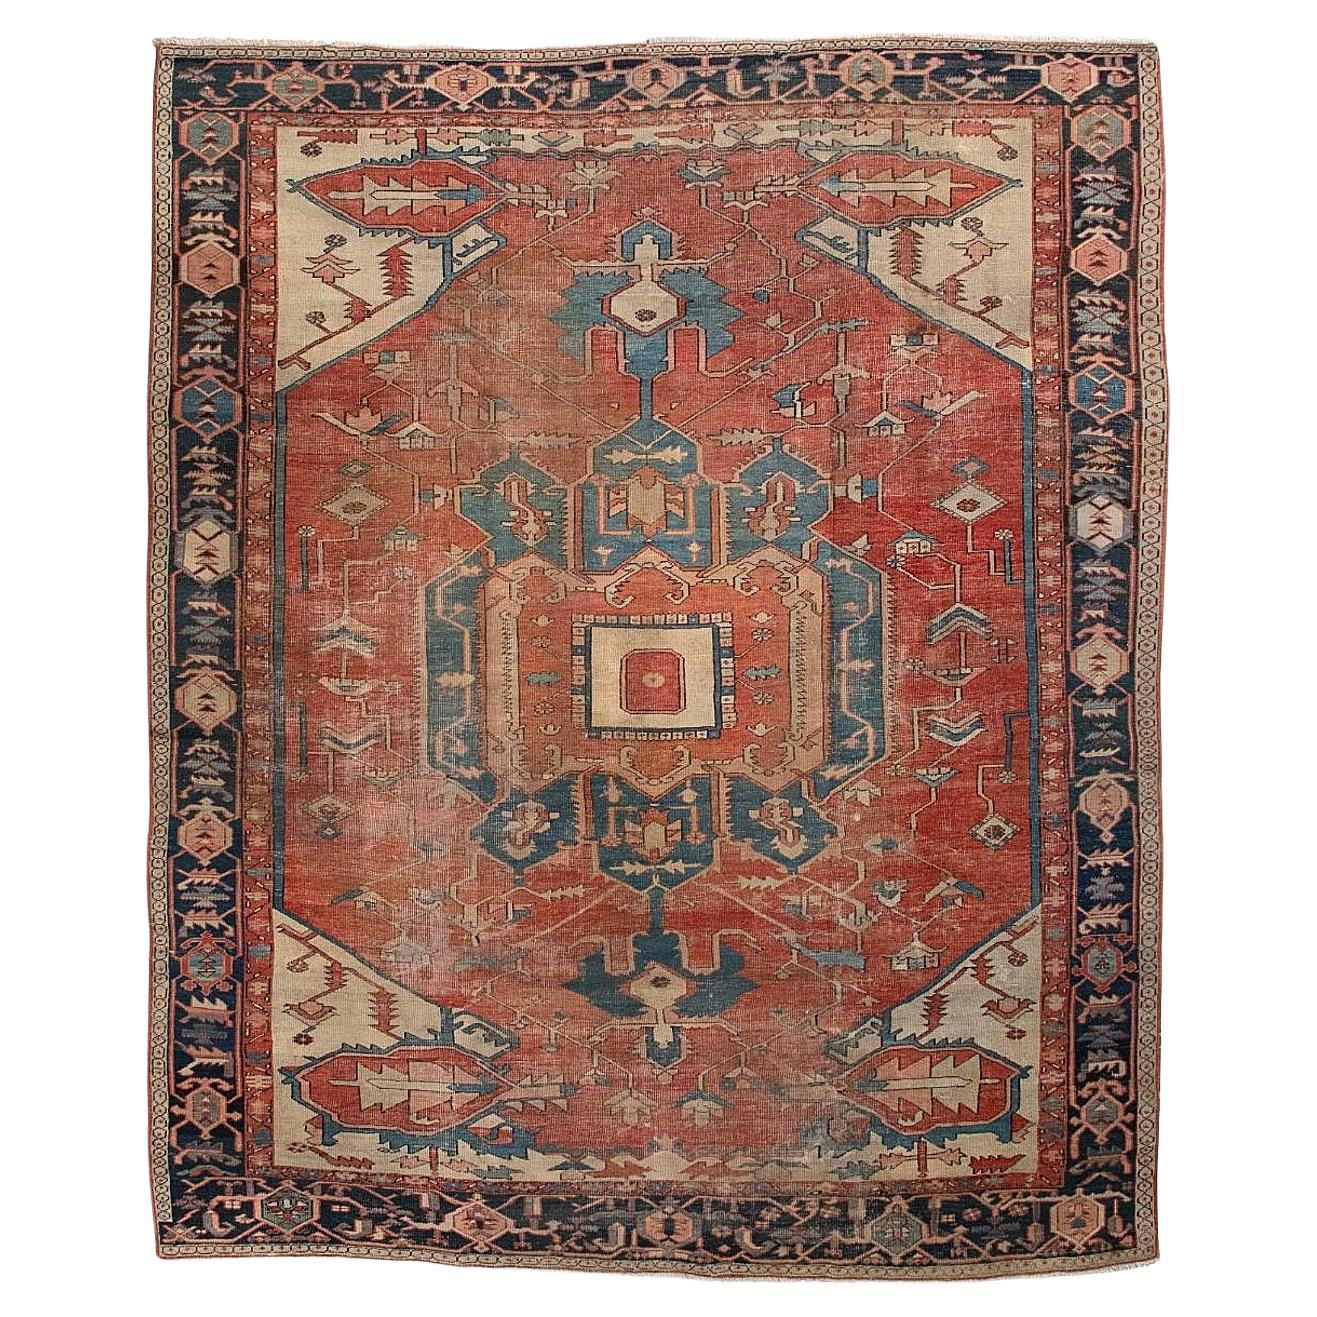 19th Century Antique Persian Serapi Carpet Handmade Oriental Rug For Sale